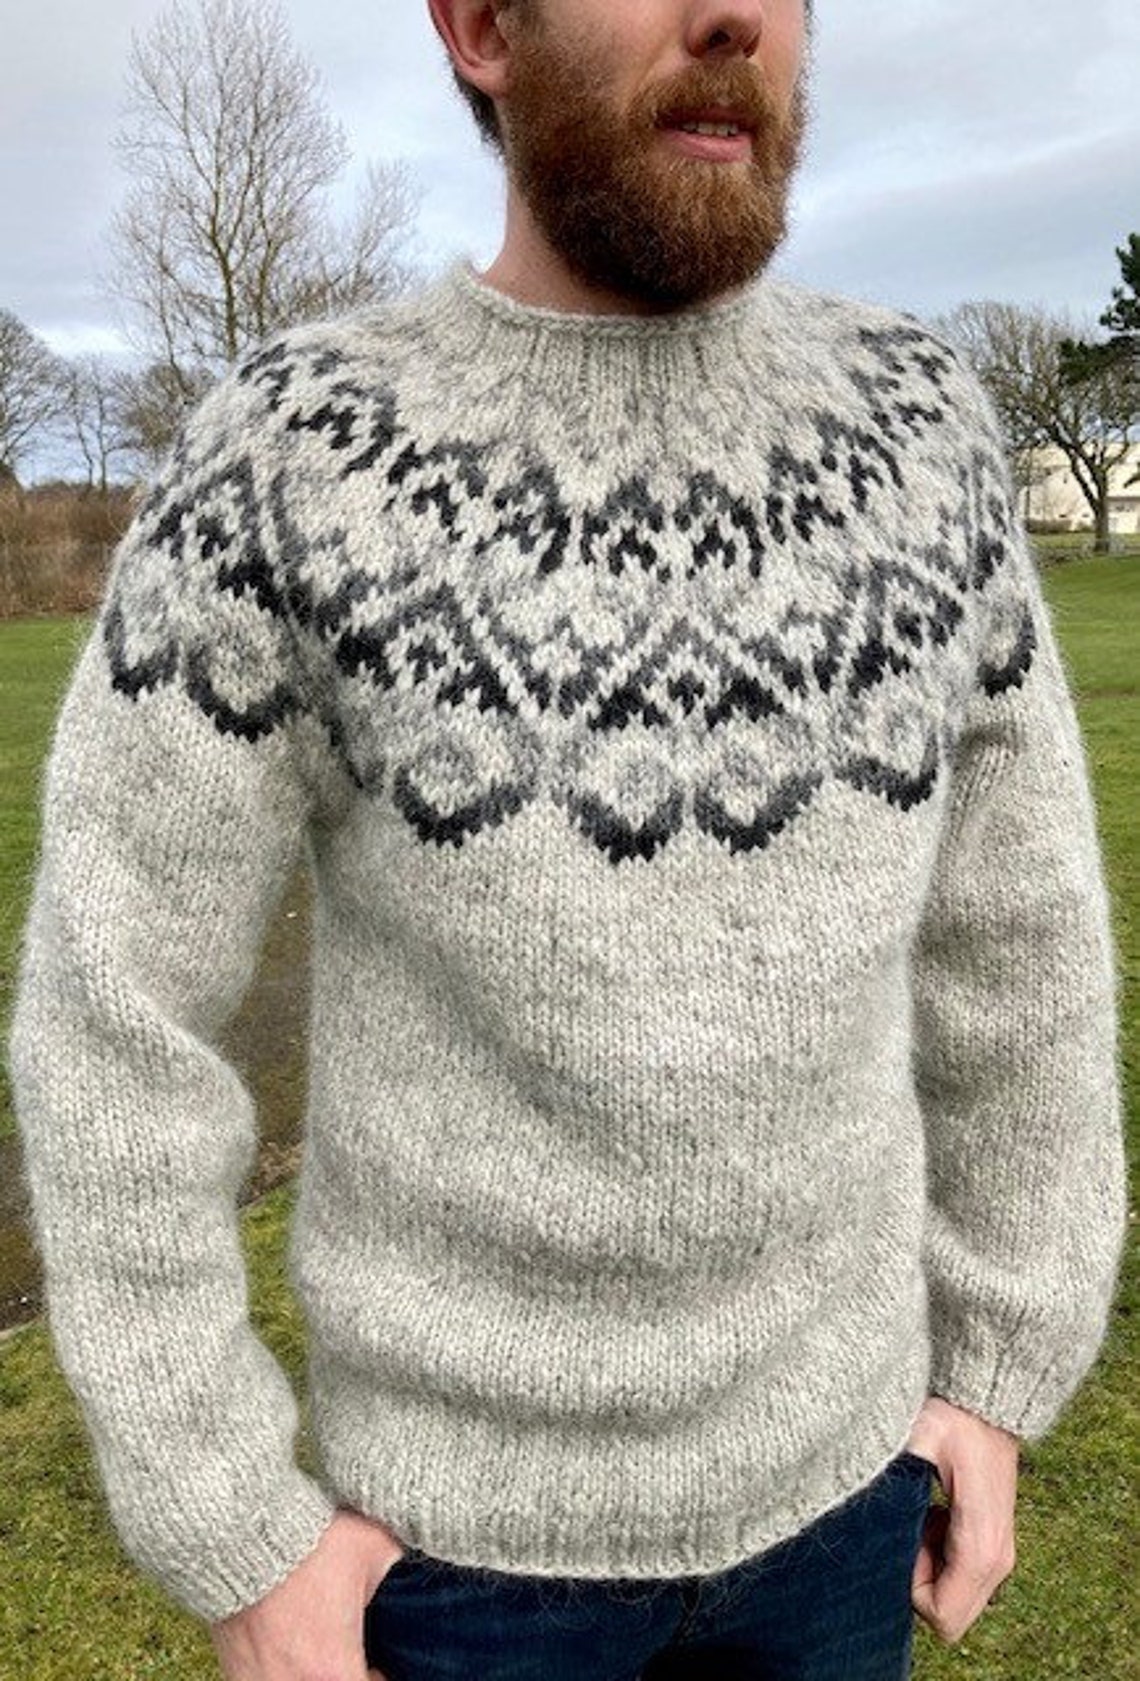 Knitted Icelandic jumper sweater 100% Alafoss Lopi Wool yarn. | Etsy